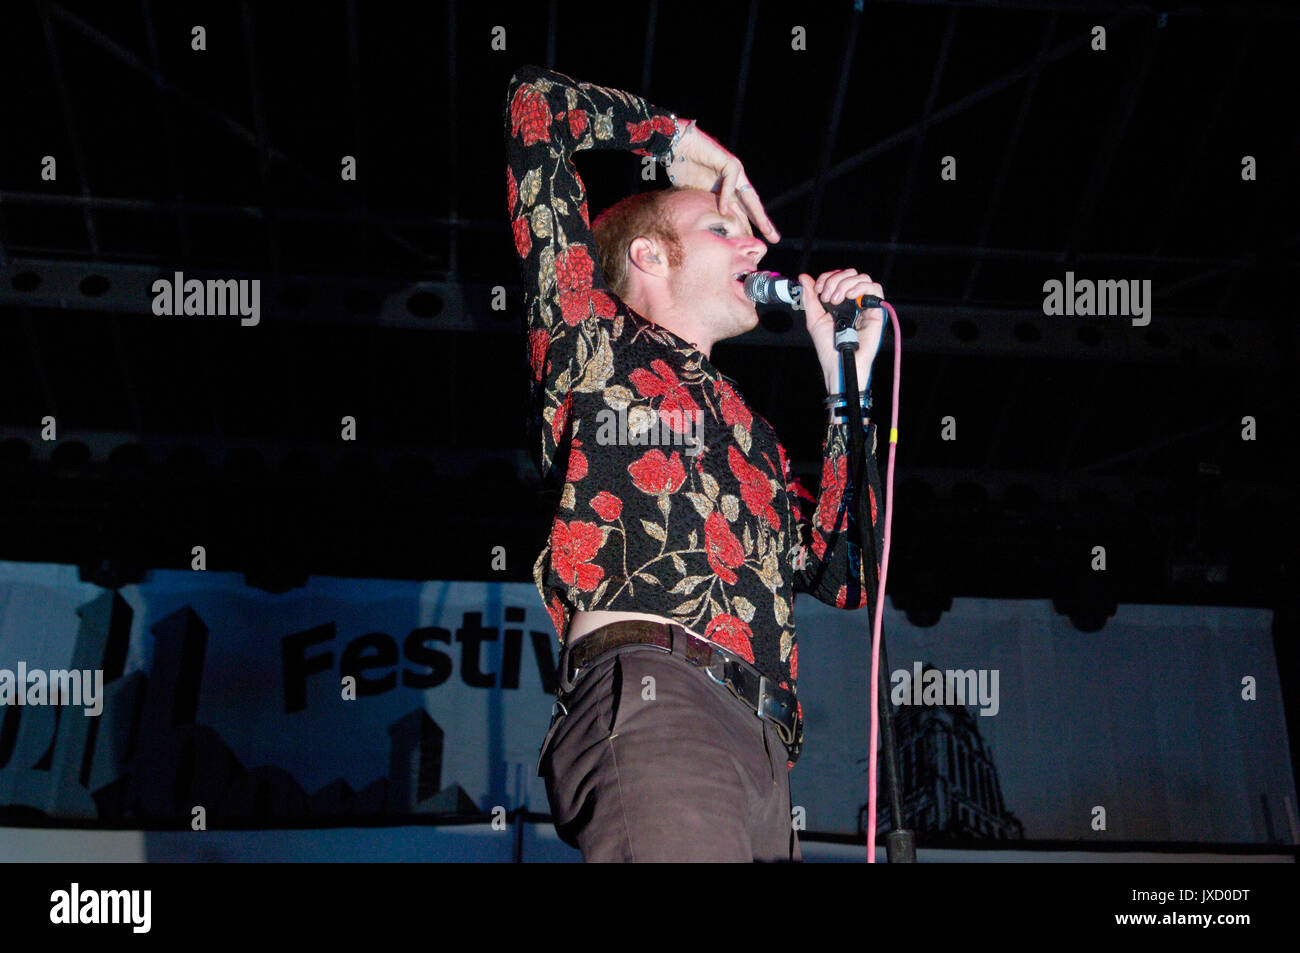 Todd fink débil realizar 2007 festival de música de barrio la Coliseum de Los Angeles,CA Foto de stock